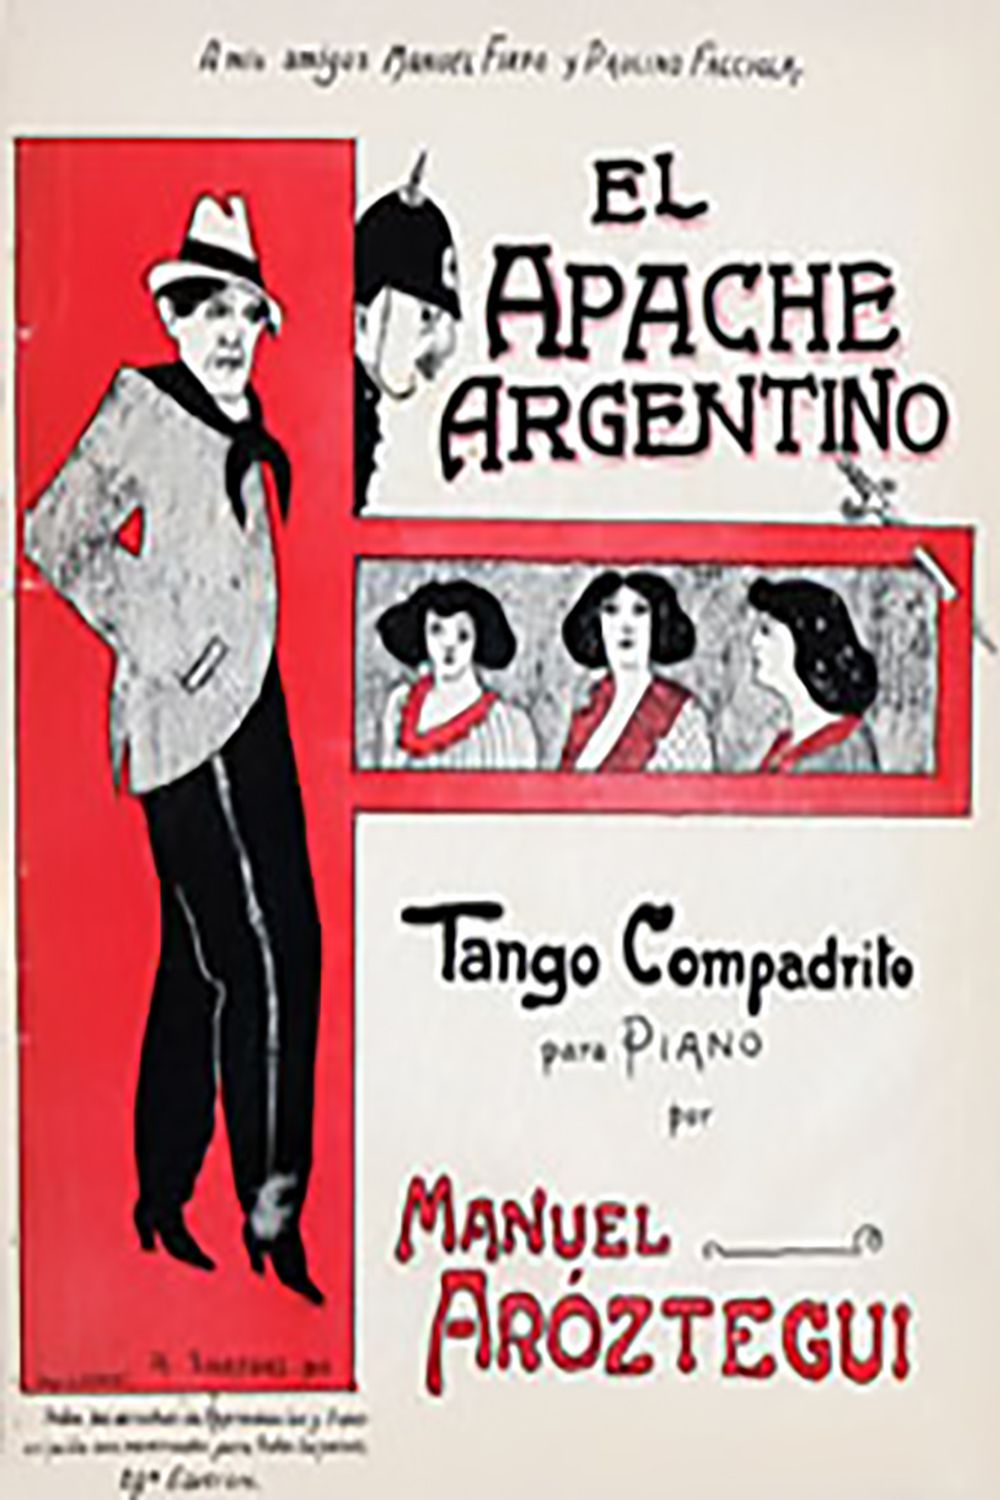 "El apache argentino", Argentine Tango music sheet cover.